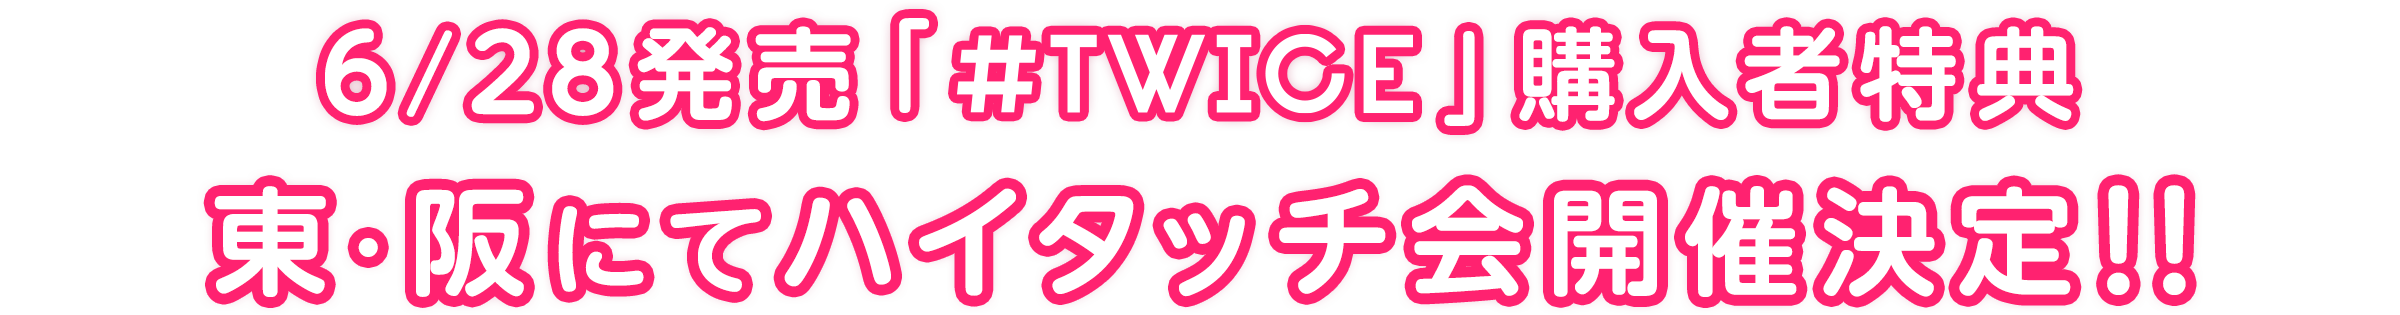 TWICE」購入者特典 ハイタッチ会 | TWICE OFFICIAL SITE